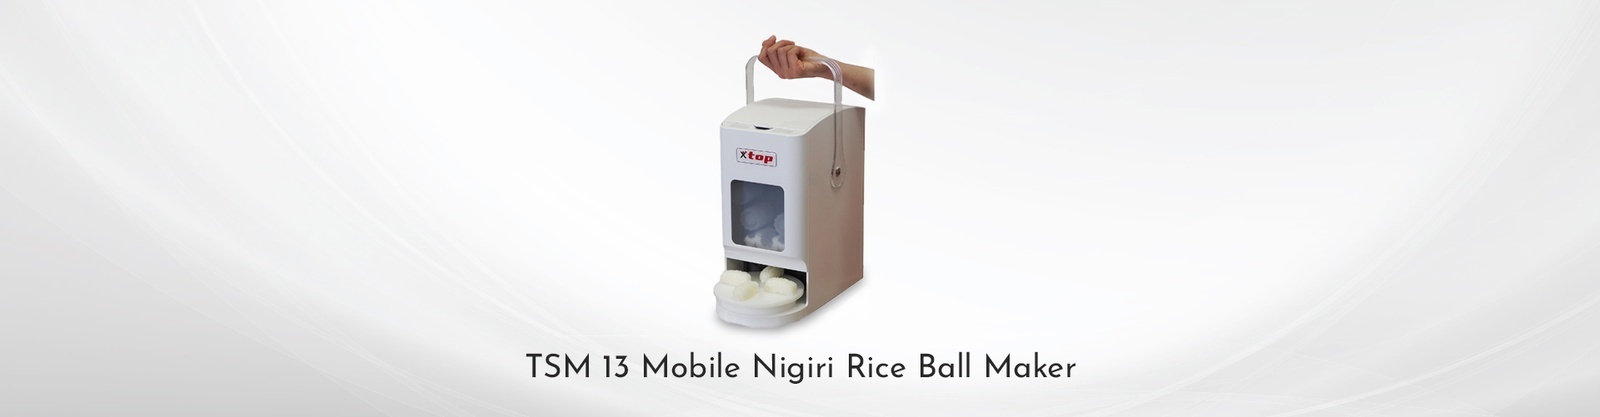 TSM 13 Mobile Nigiri Rice Ball Maker